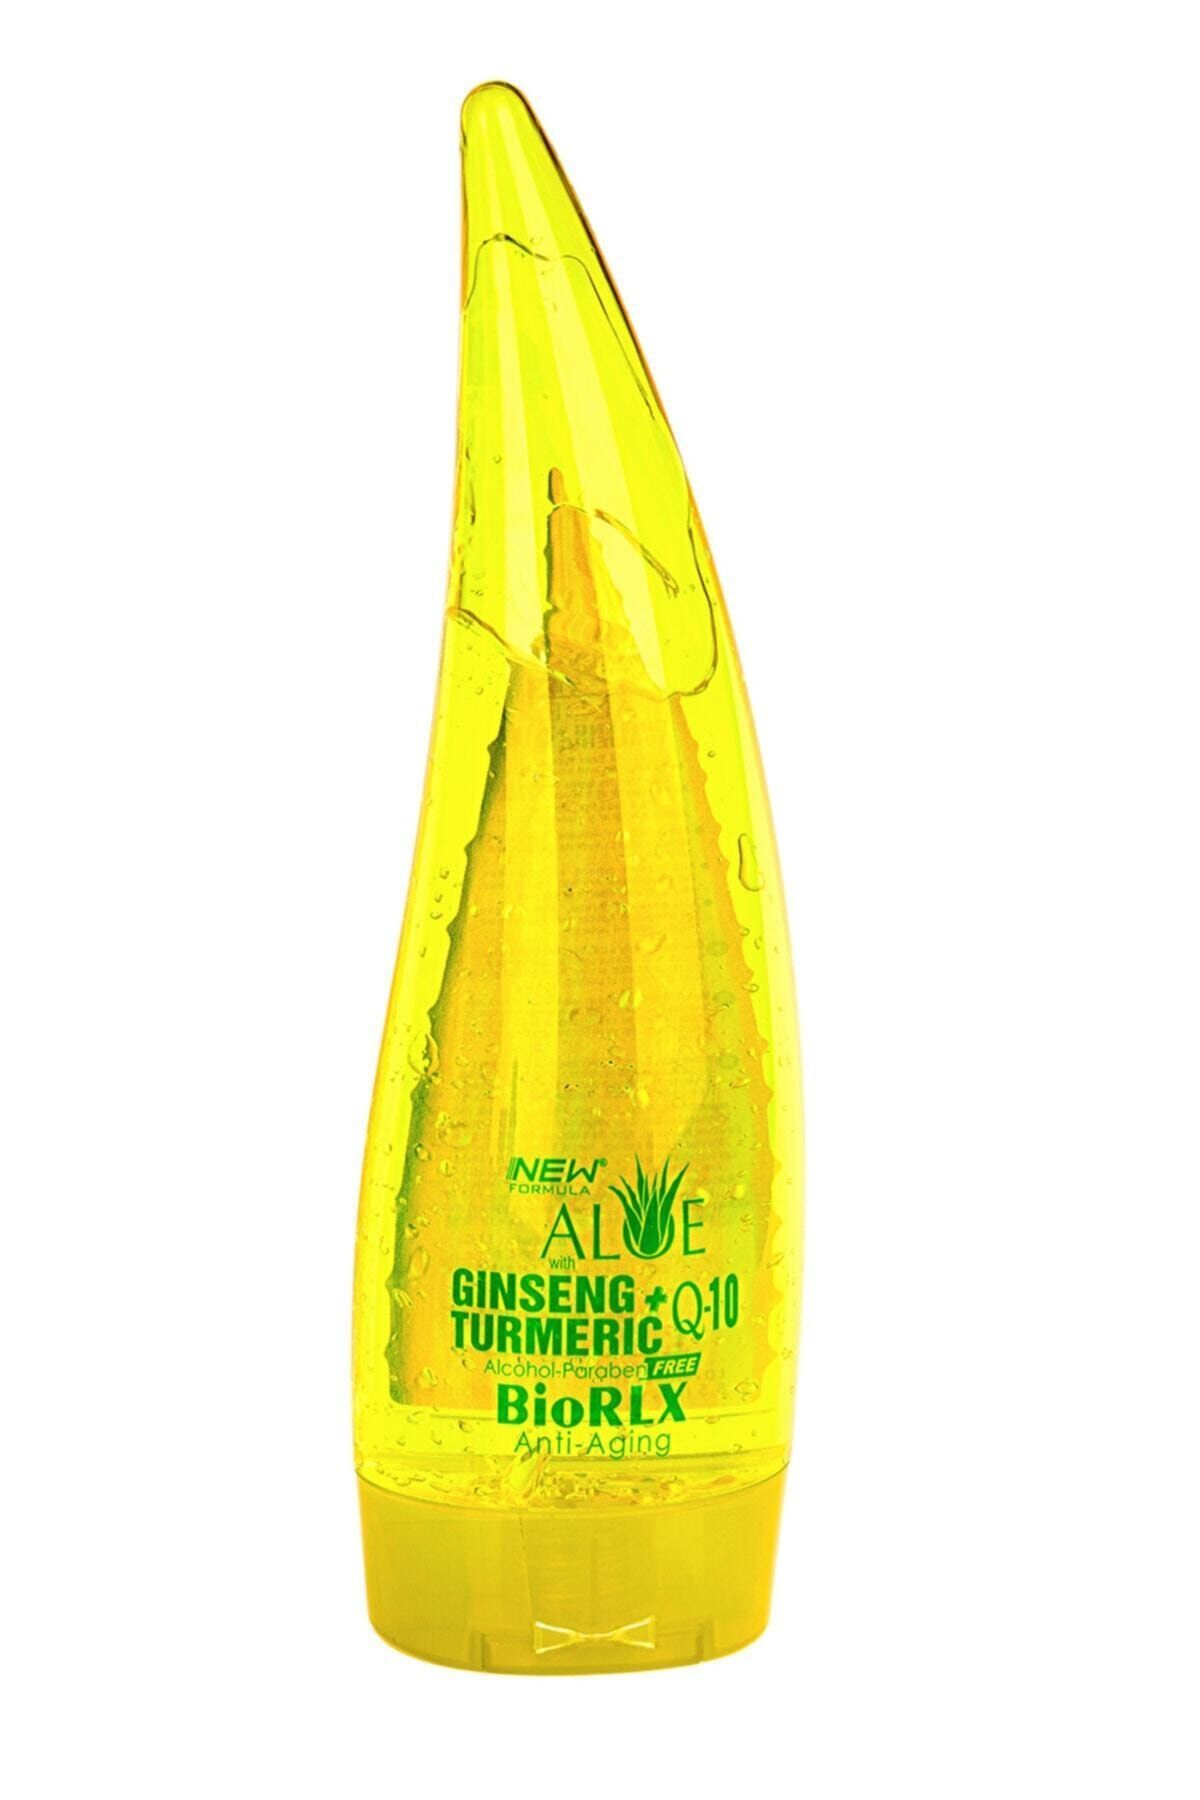 BioRLX Aloe Vera Ginseng Q10 Turmeric Jel 250 ml